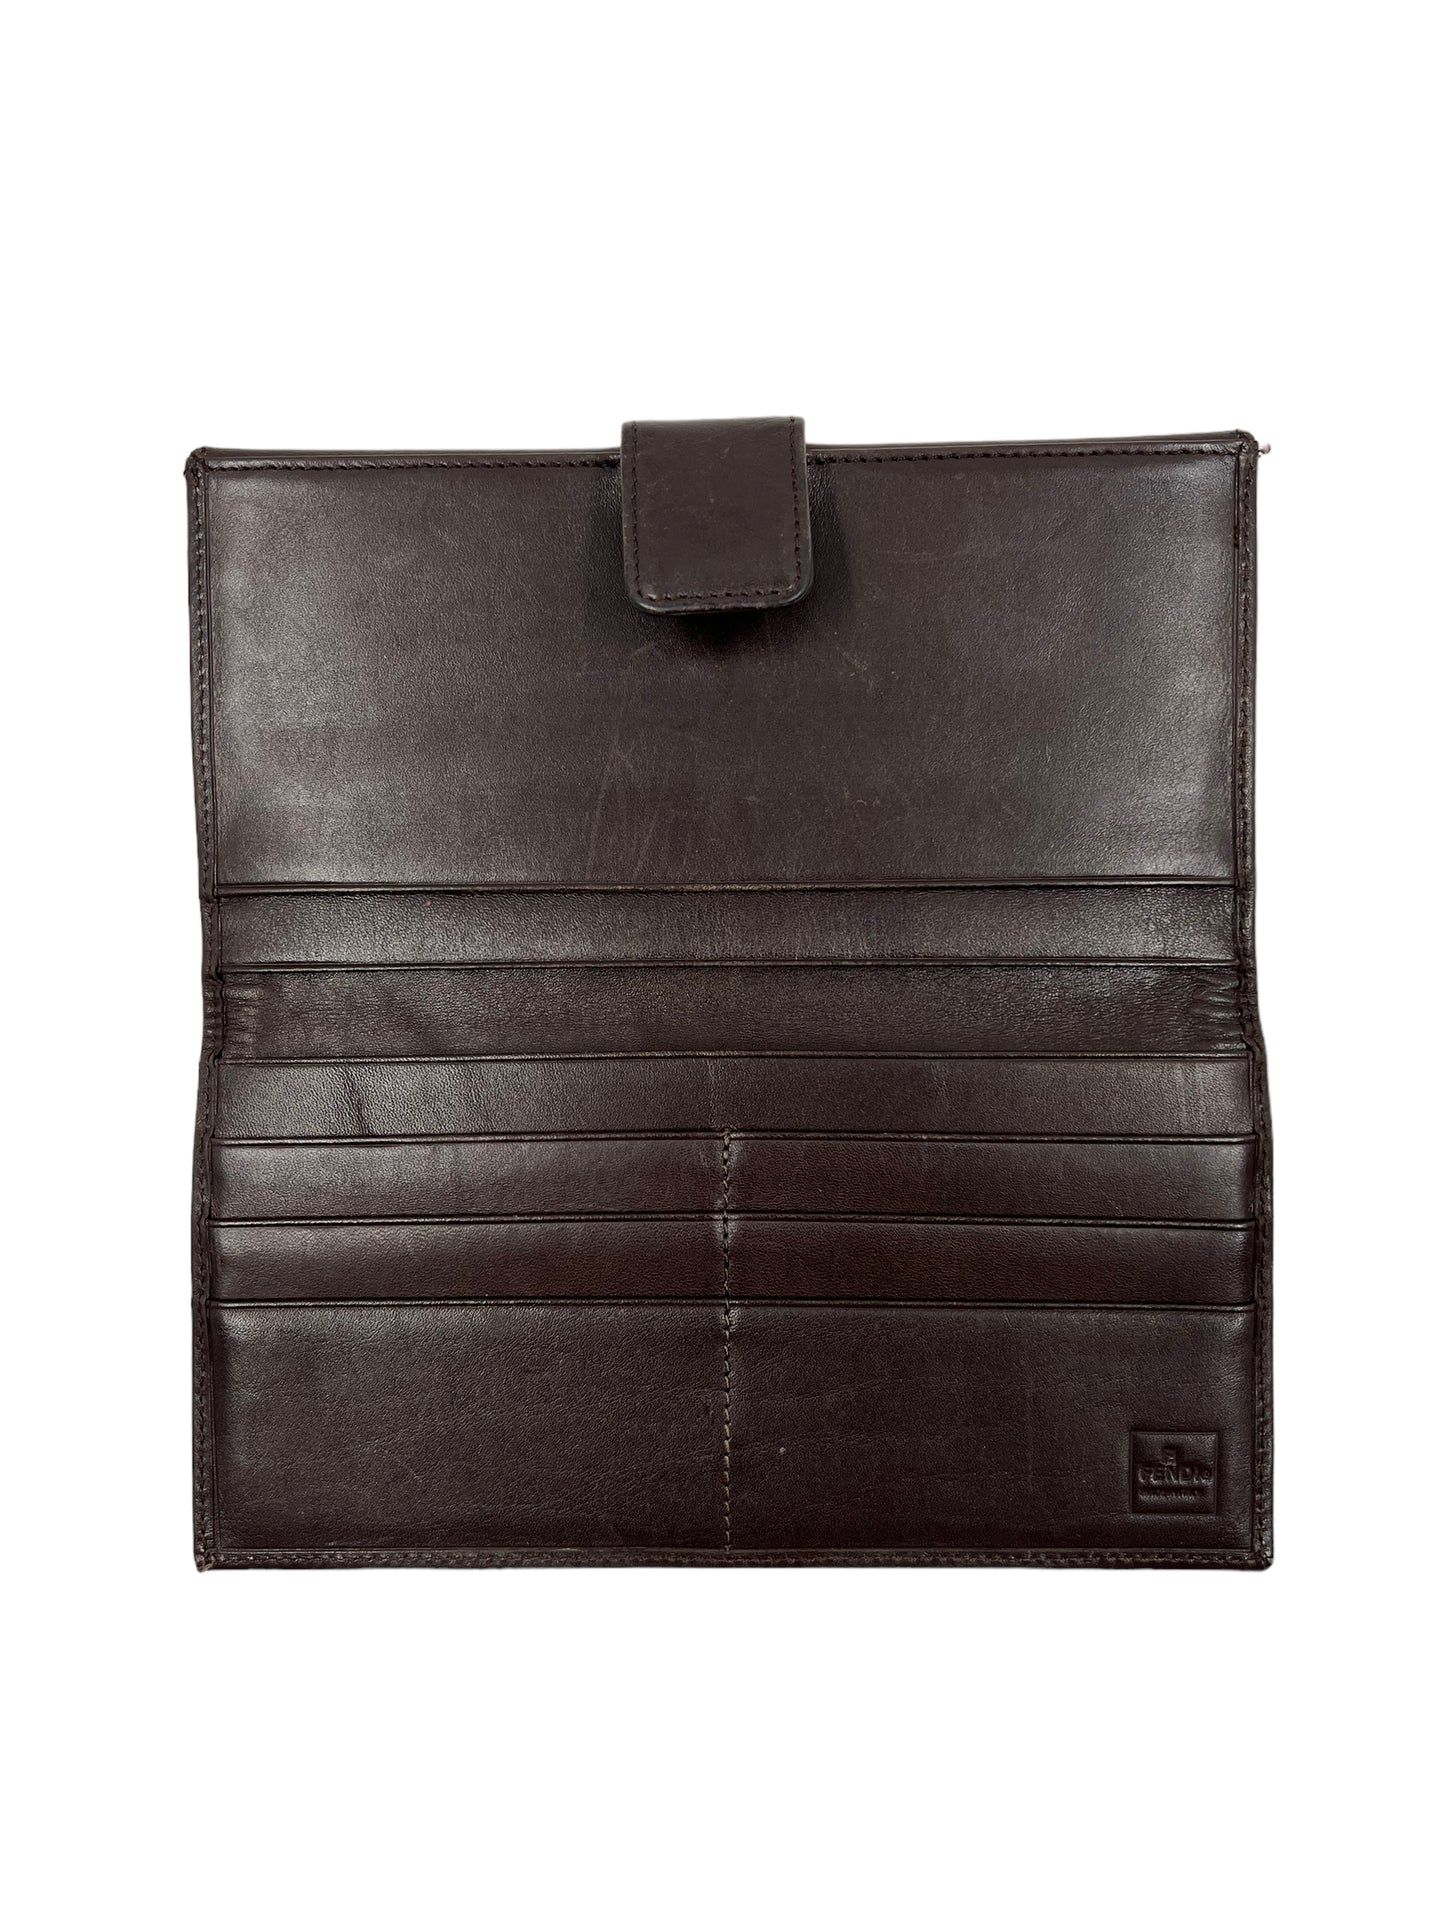 Fendi Zucca Print Canvas Leather Front Flap Wallet